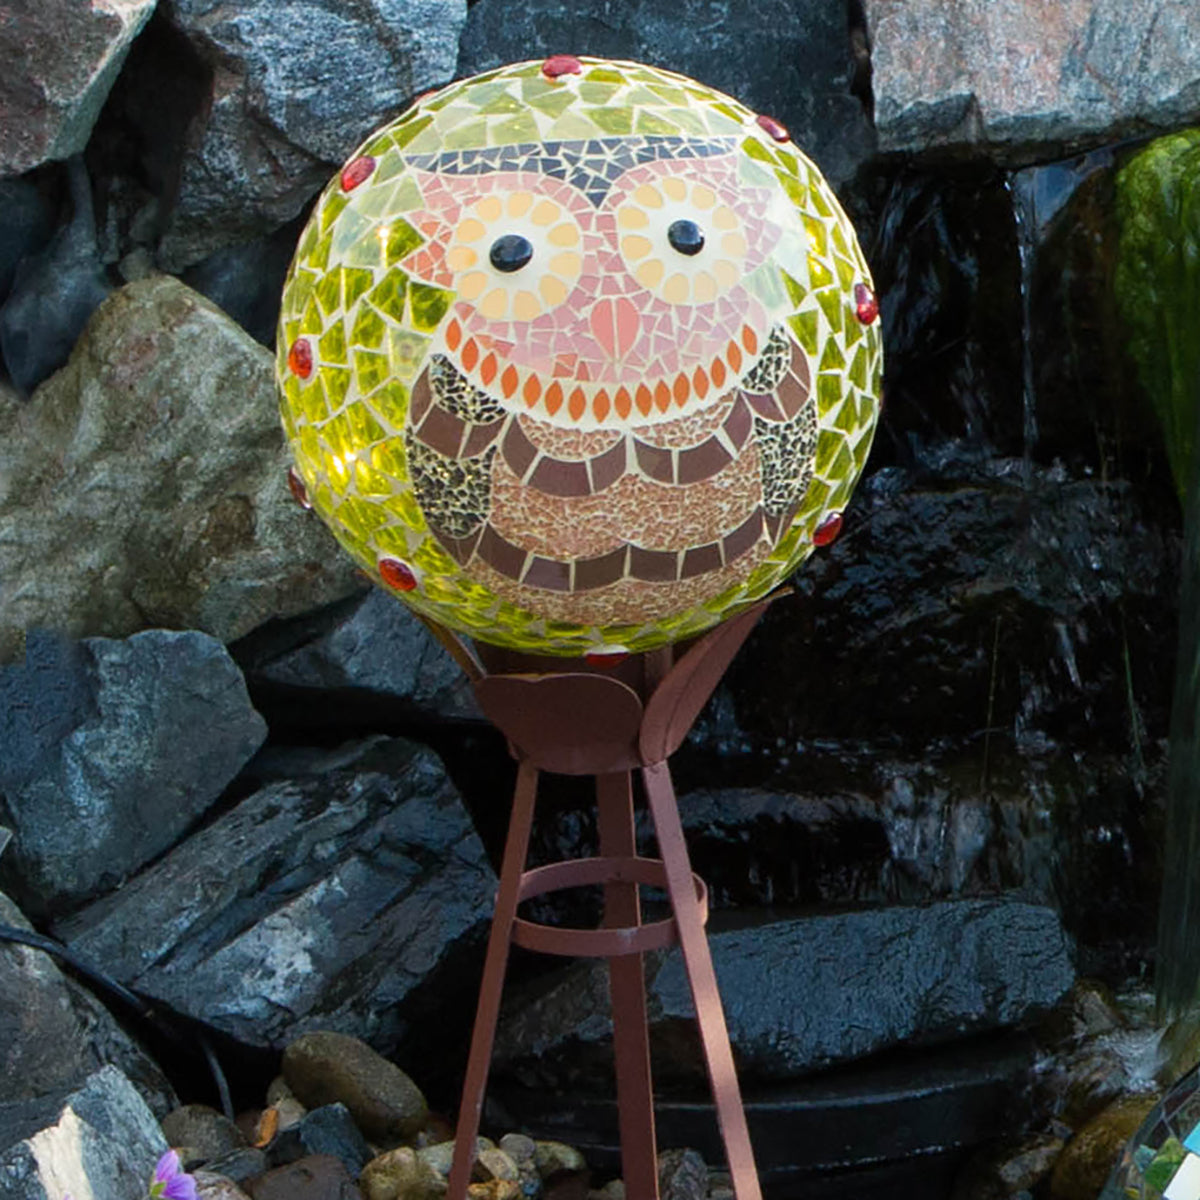 10" Mosaic Owl Gazing Globe